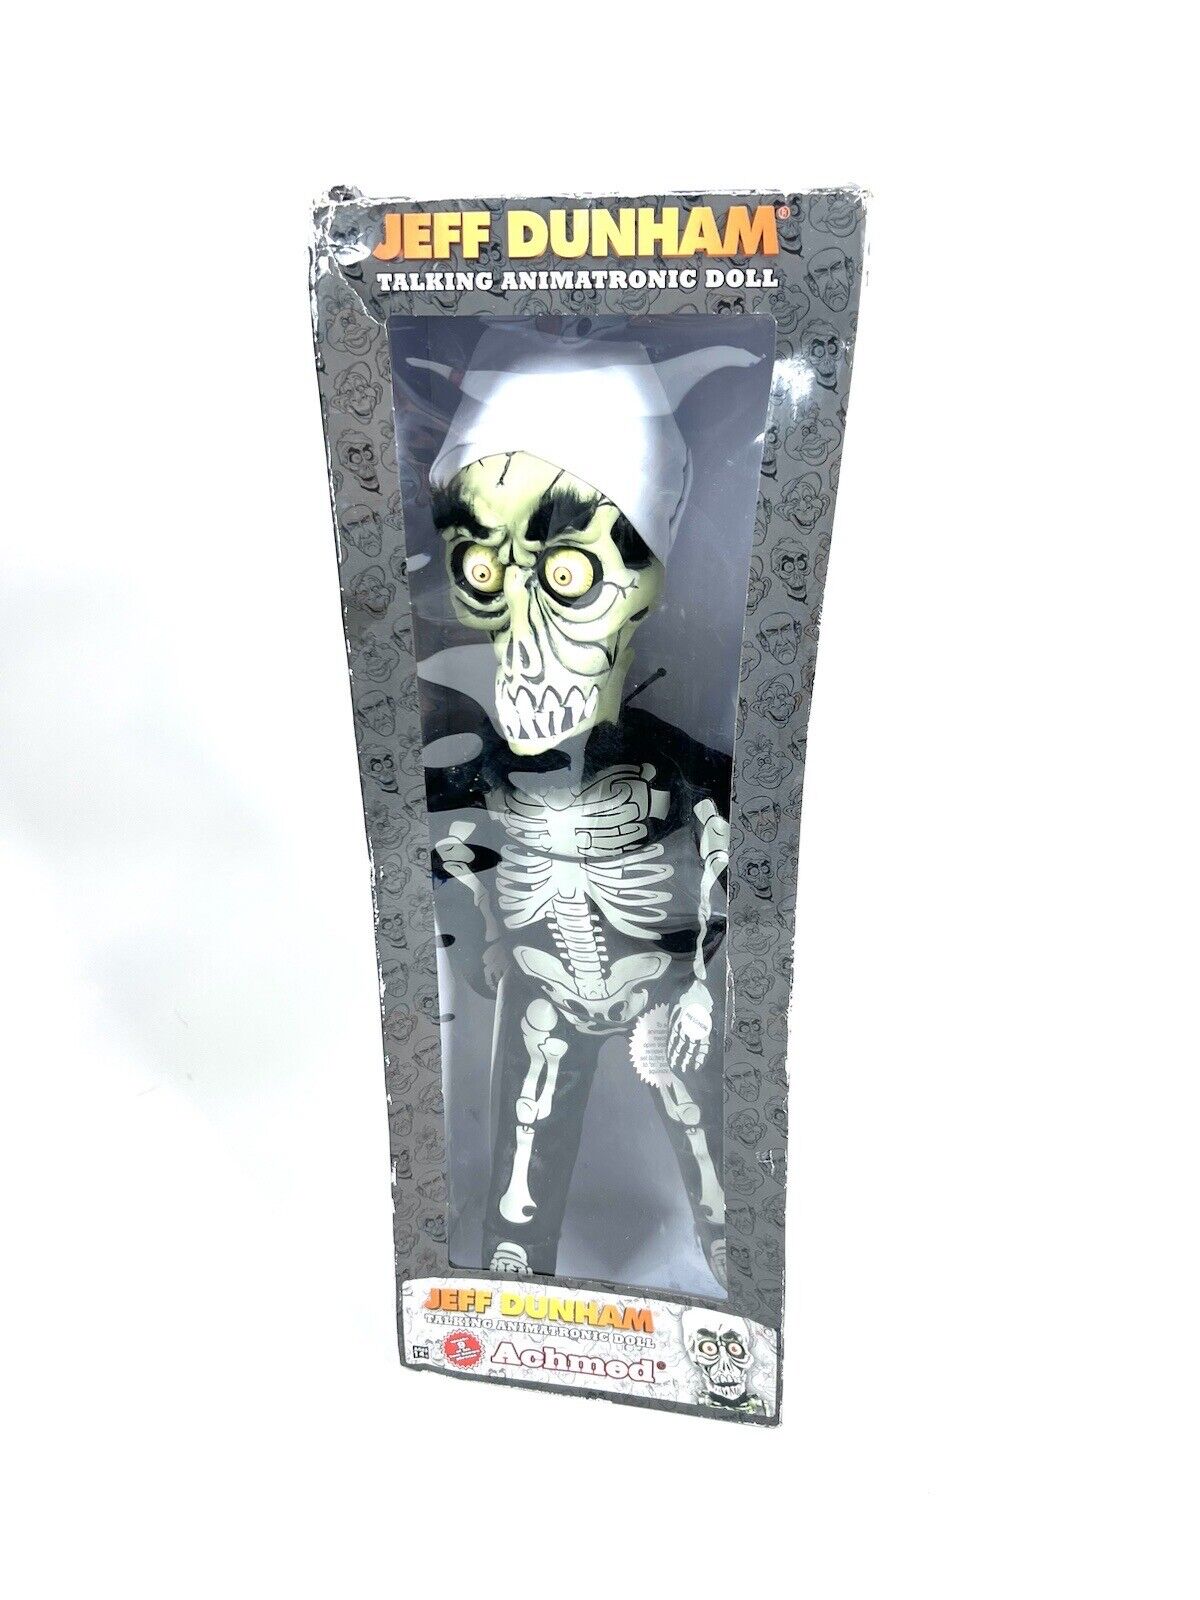 NECA Jeff Dunham Achmed 18-Inch Talking Animatronic Doll - NEW- OPEN BOX